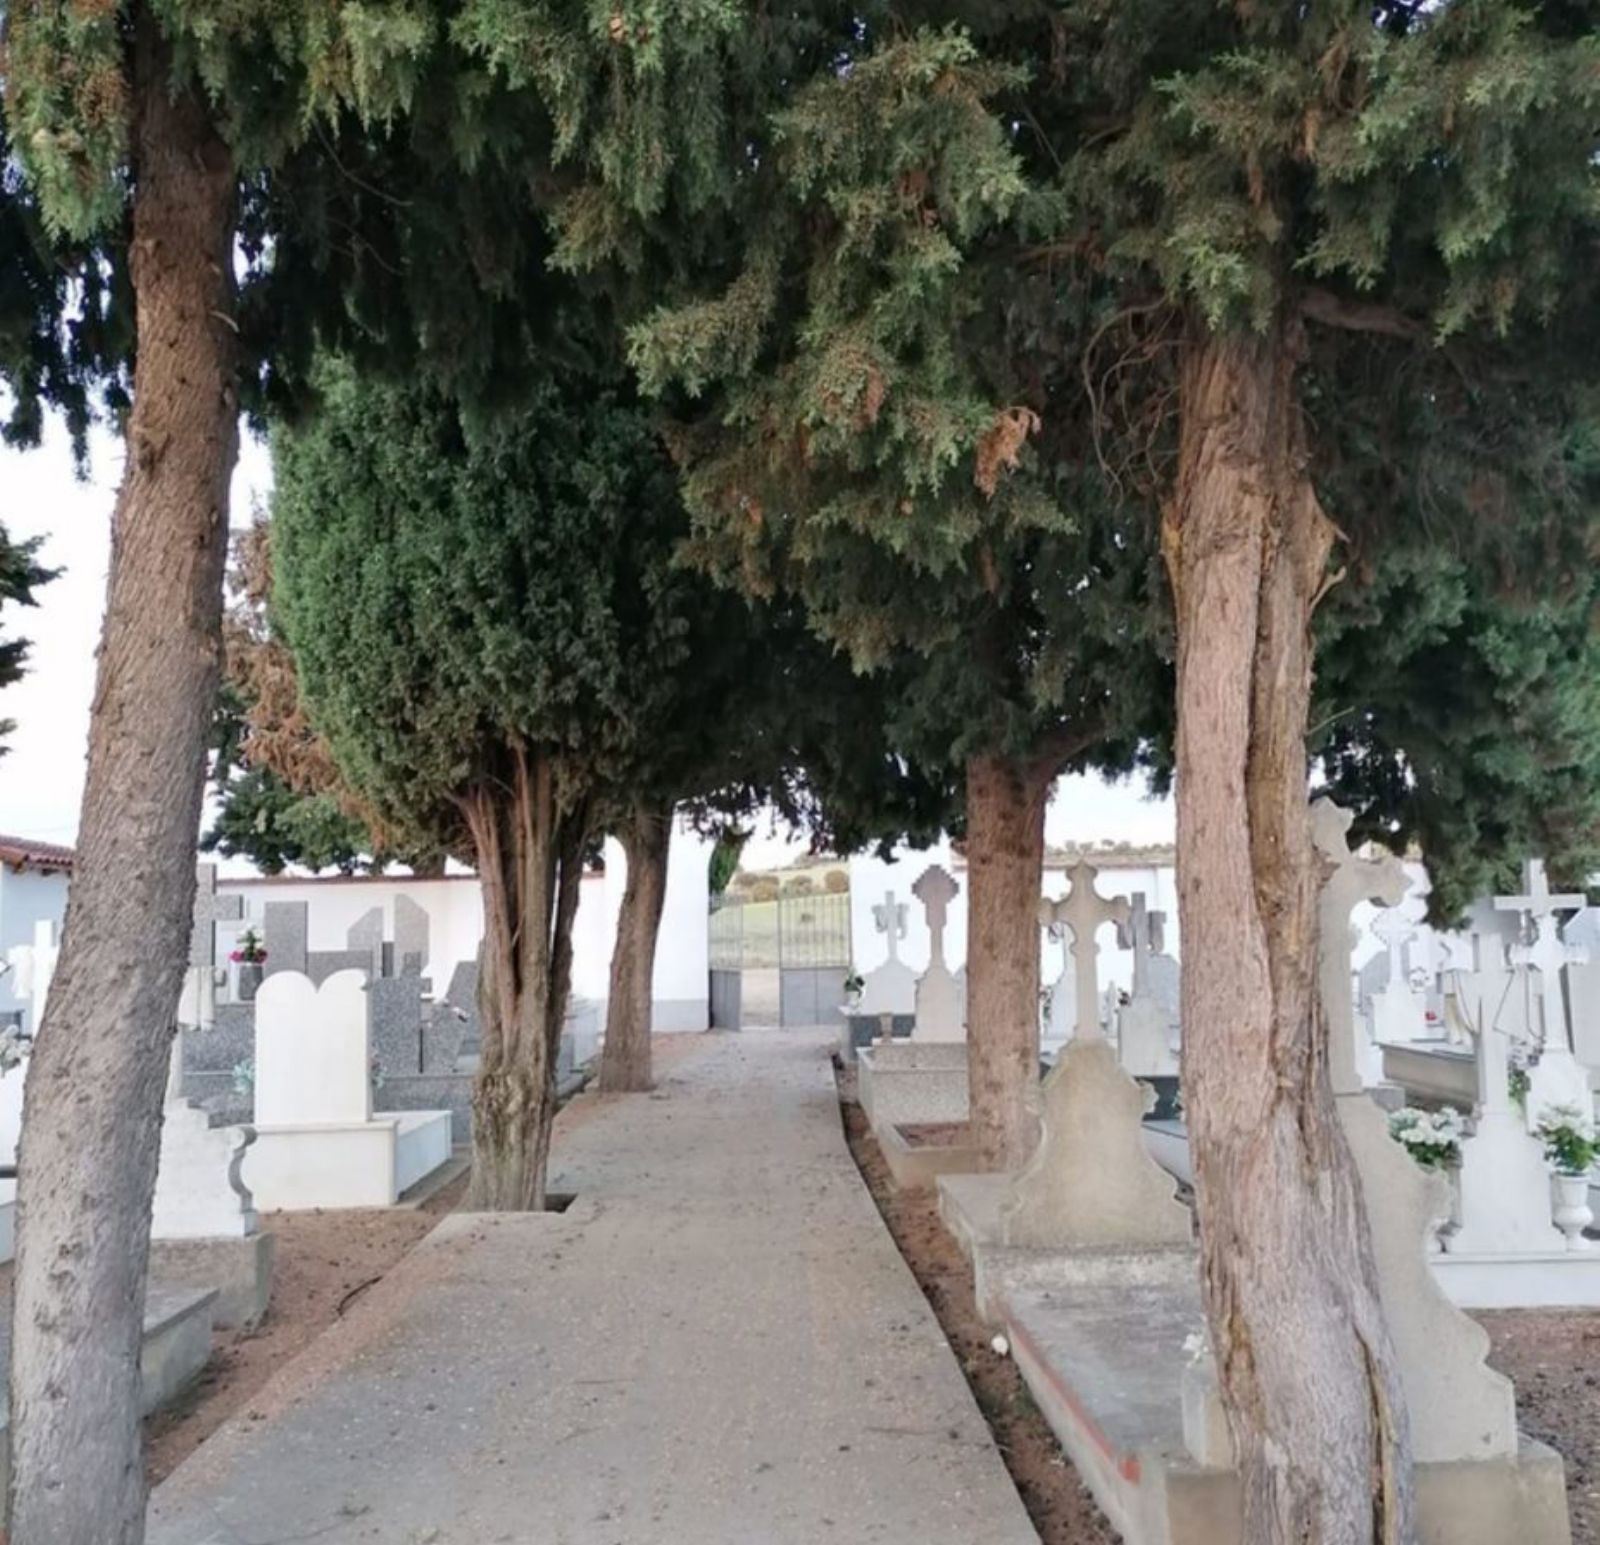 Paseo del cementerio con cipreses a ambos lados. | E. P.